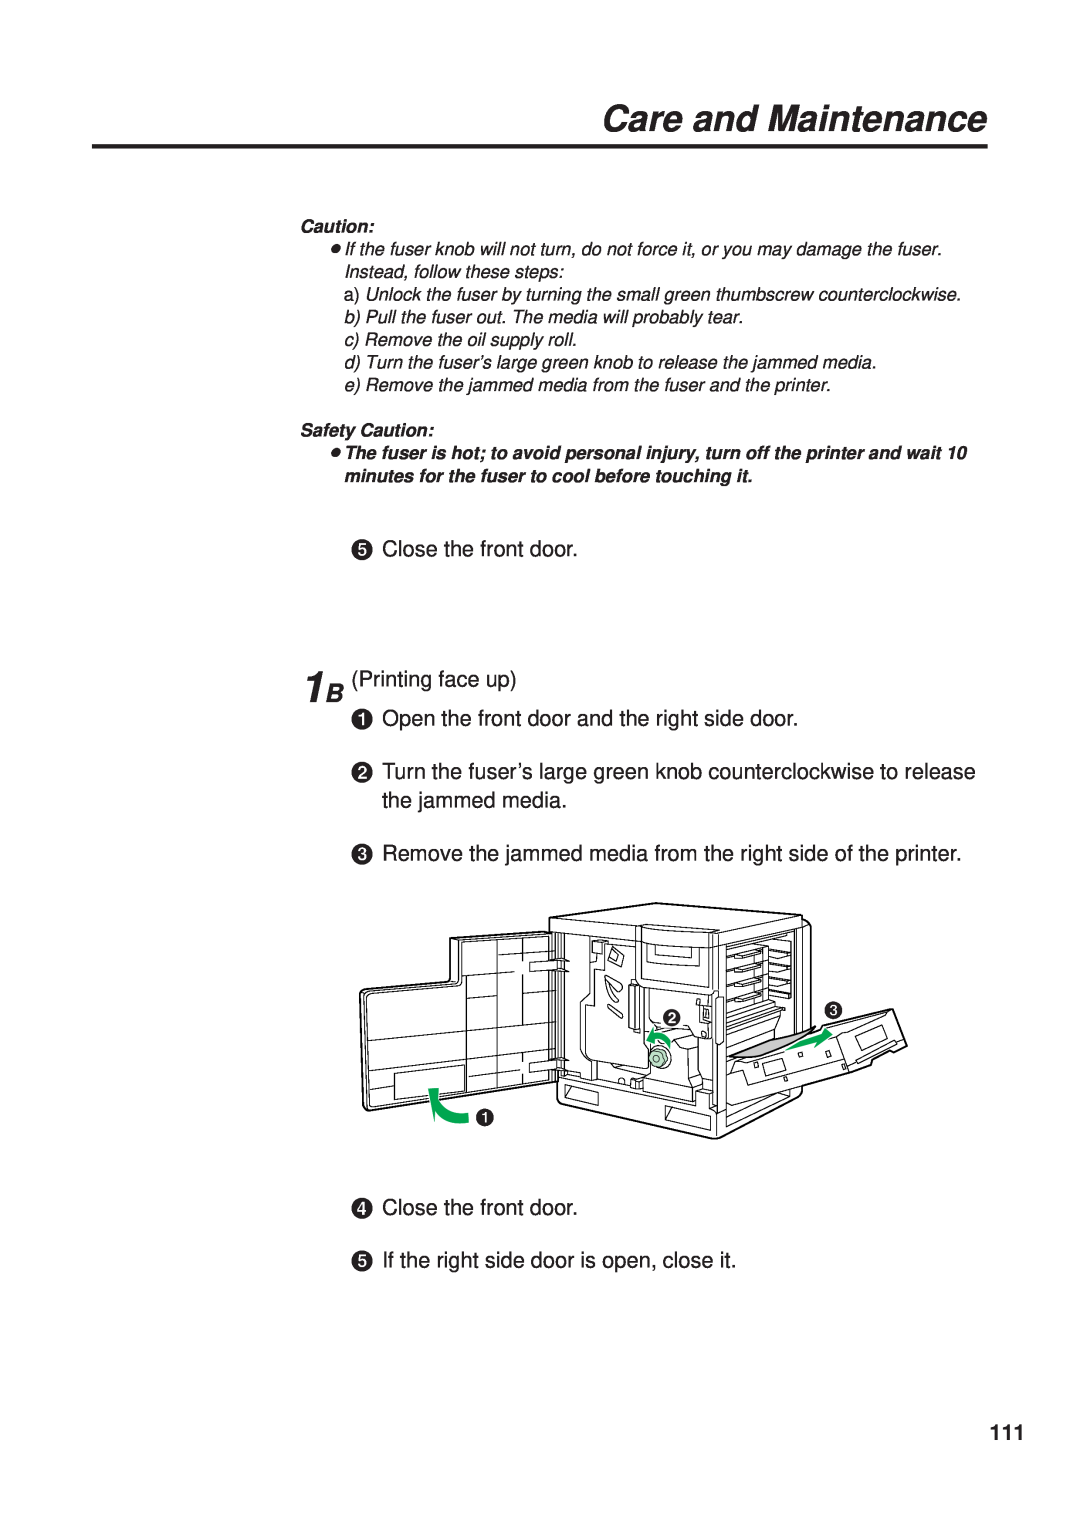 Panasonic KX-PS8000 manual Close the front door 1B Printing face up, Care and Maintenance 